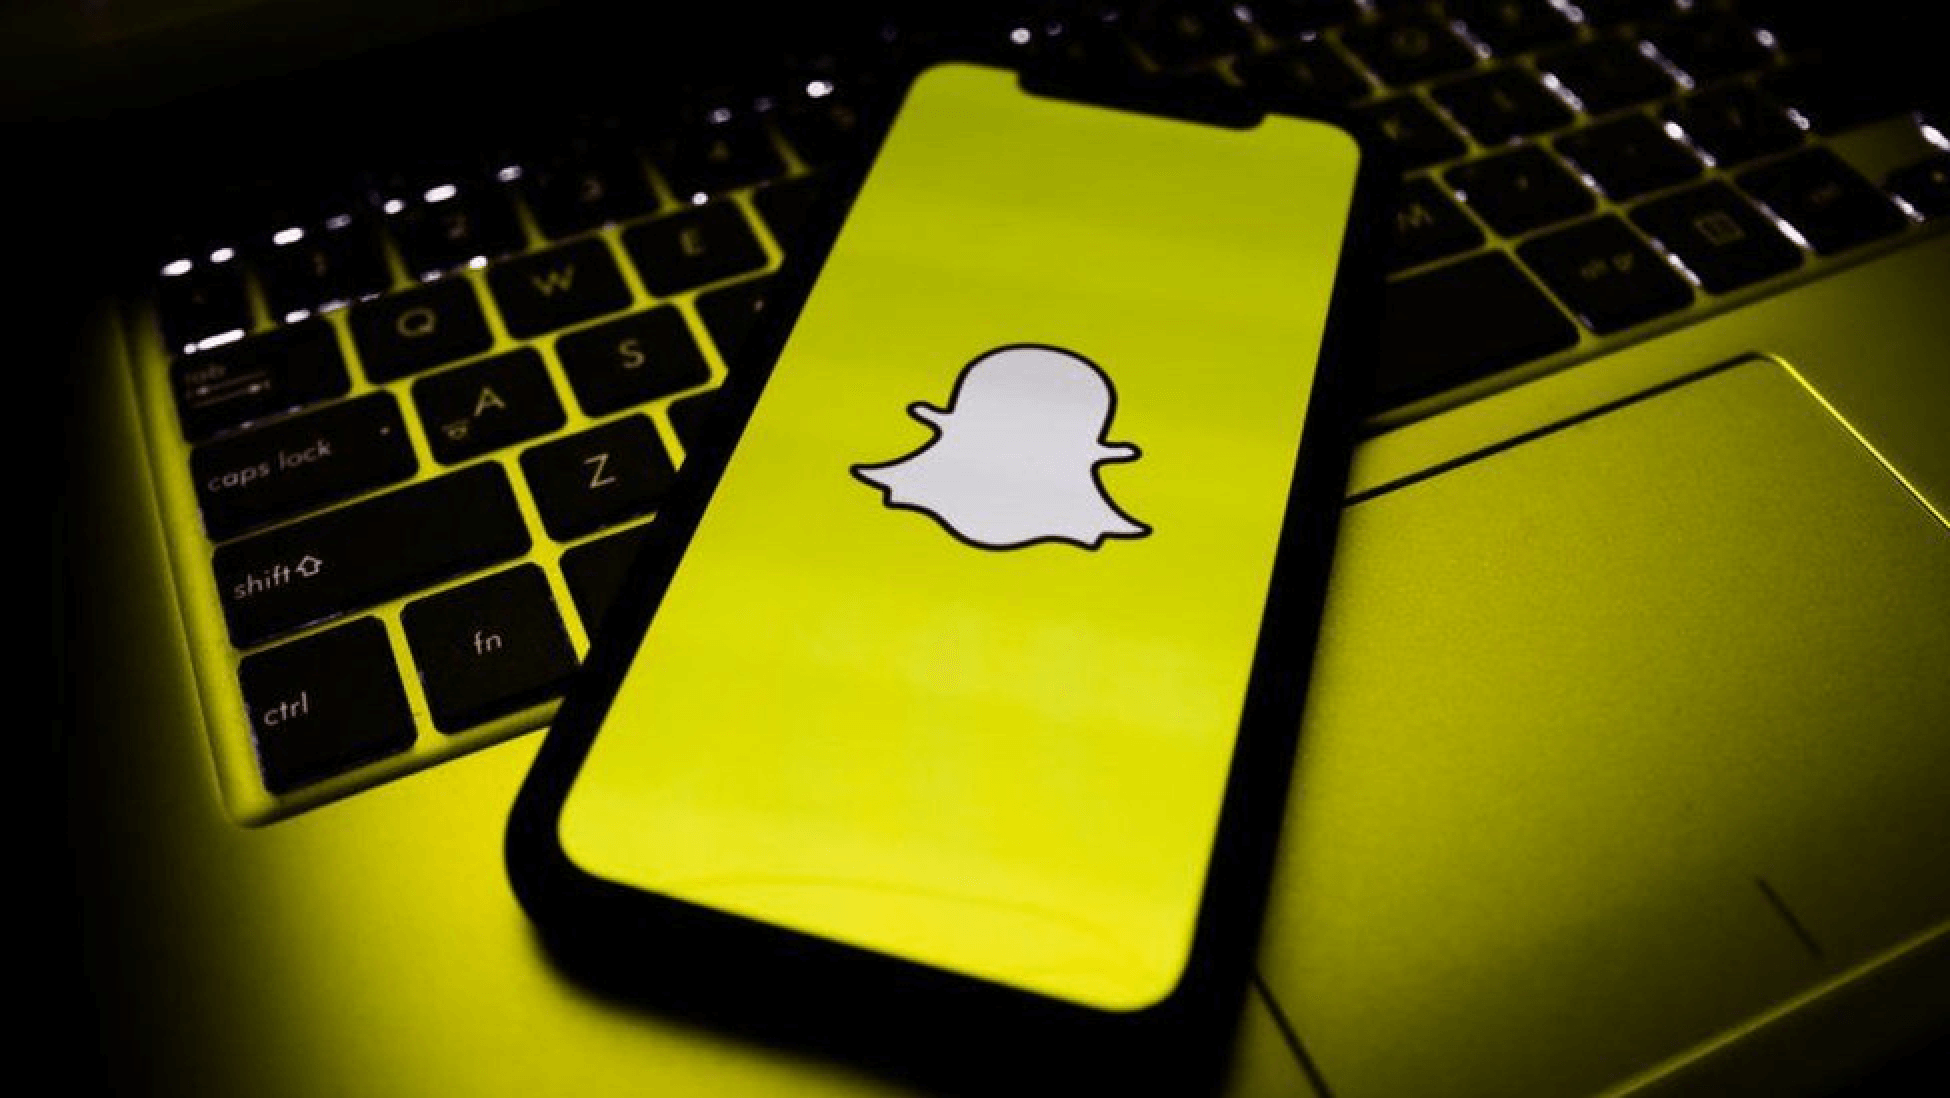 Missing Spot best Snapchat advertising agency in Iraq